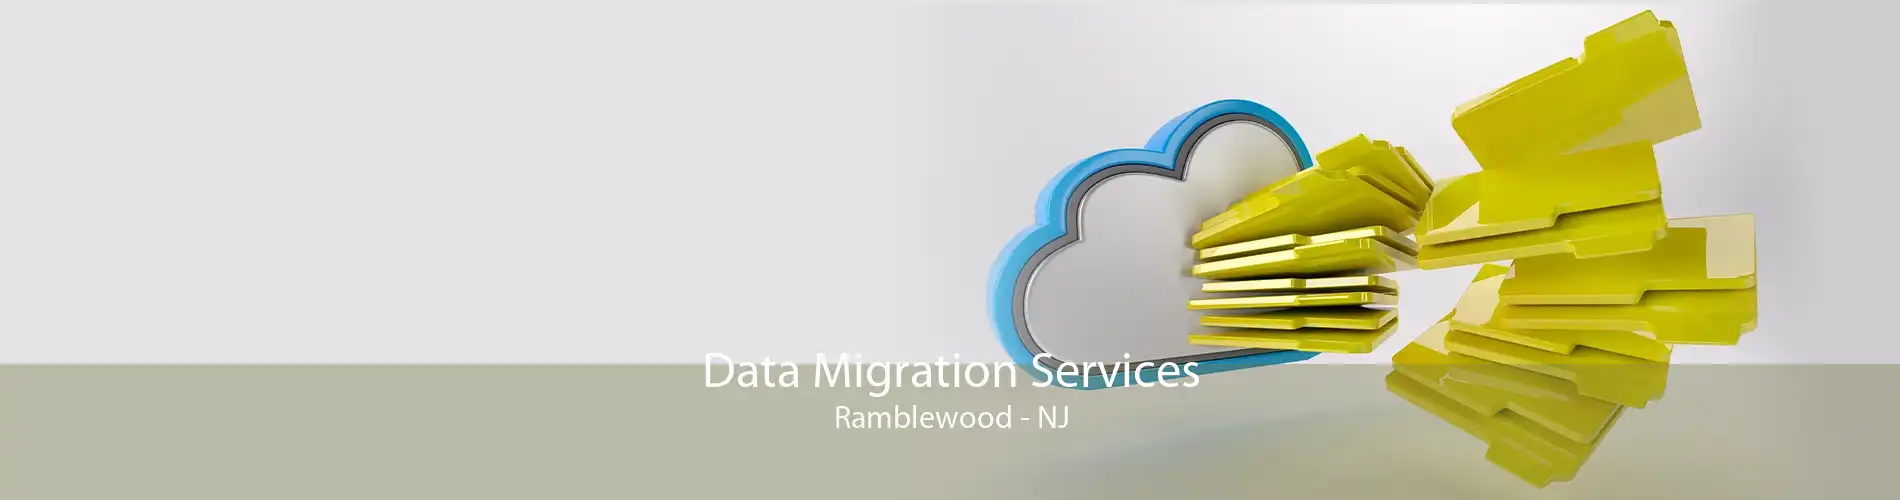 Data Migration Services Ramblewood - NJ